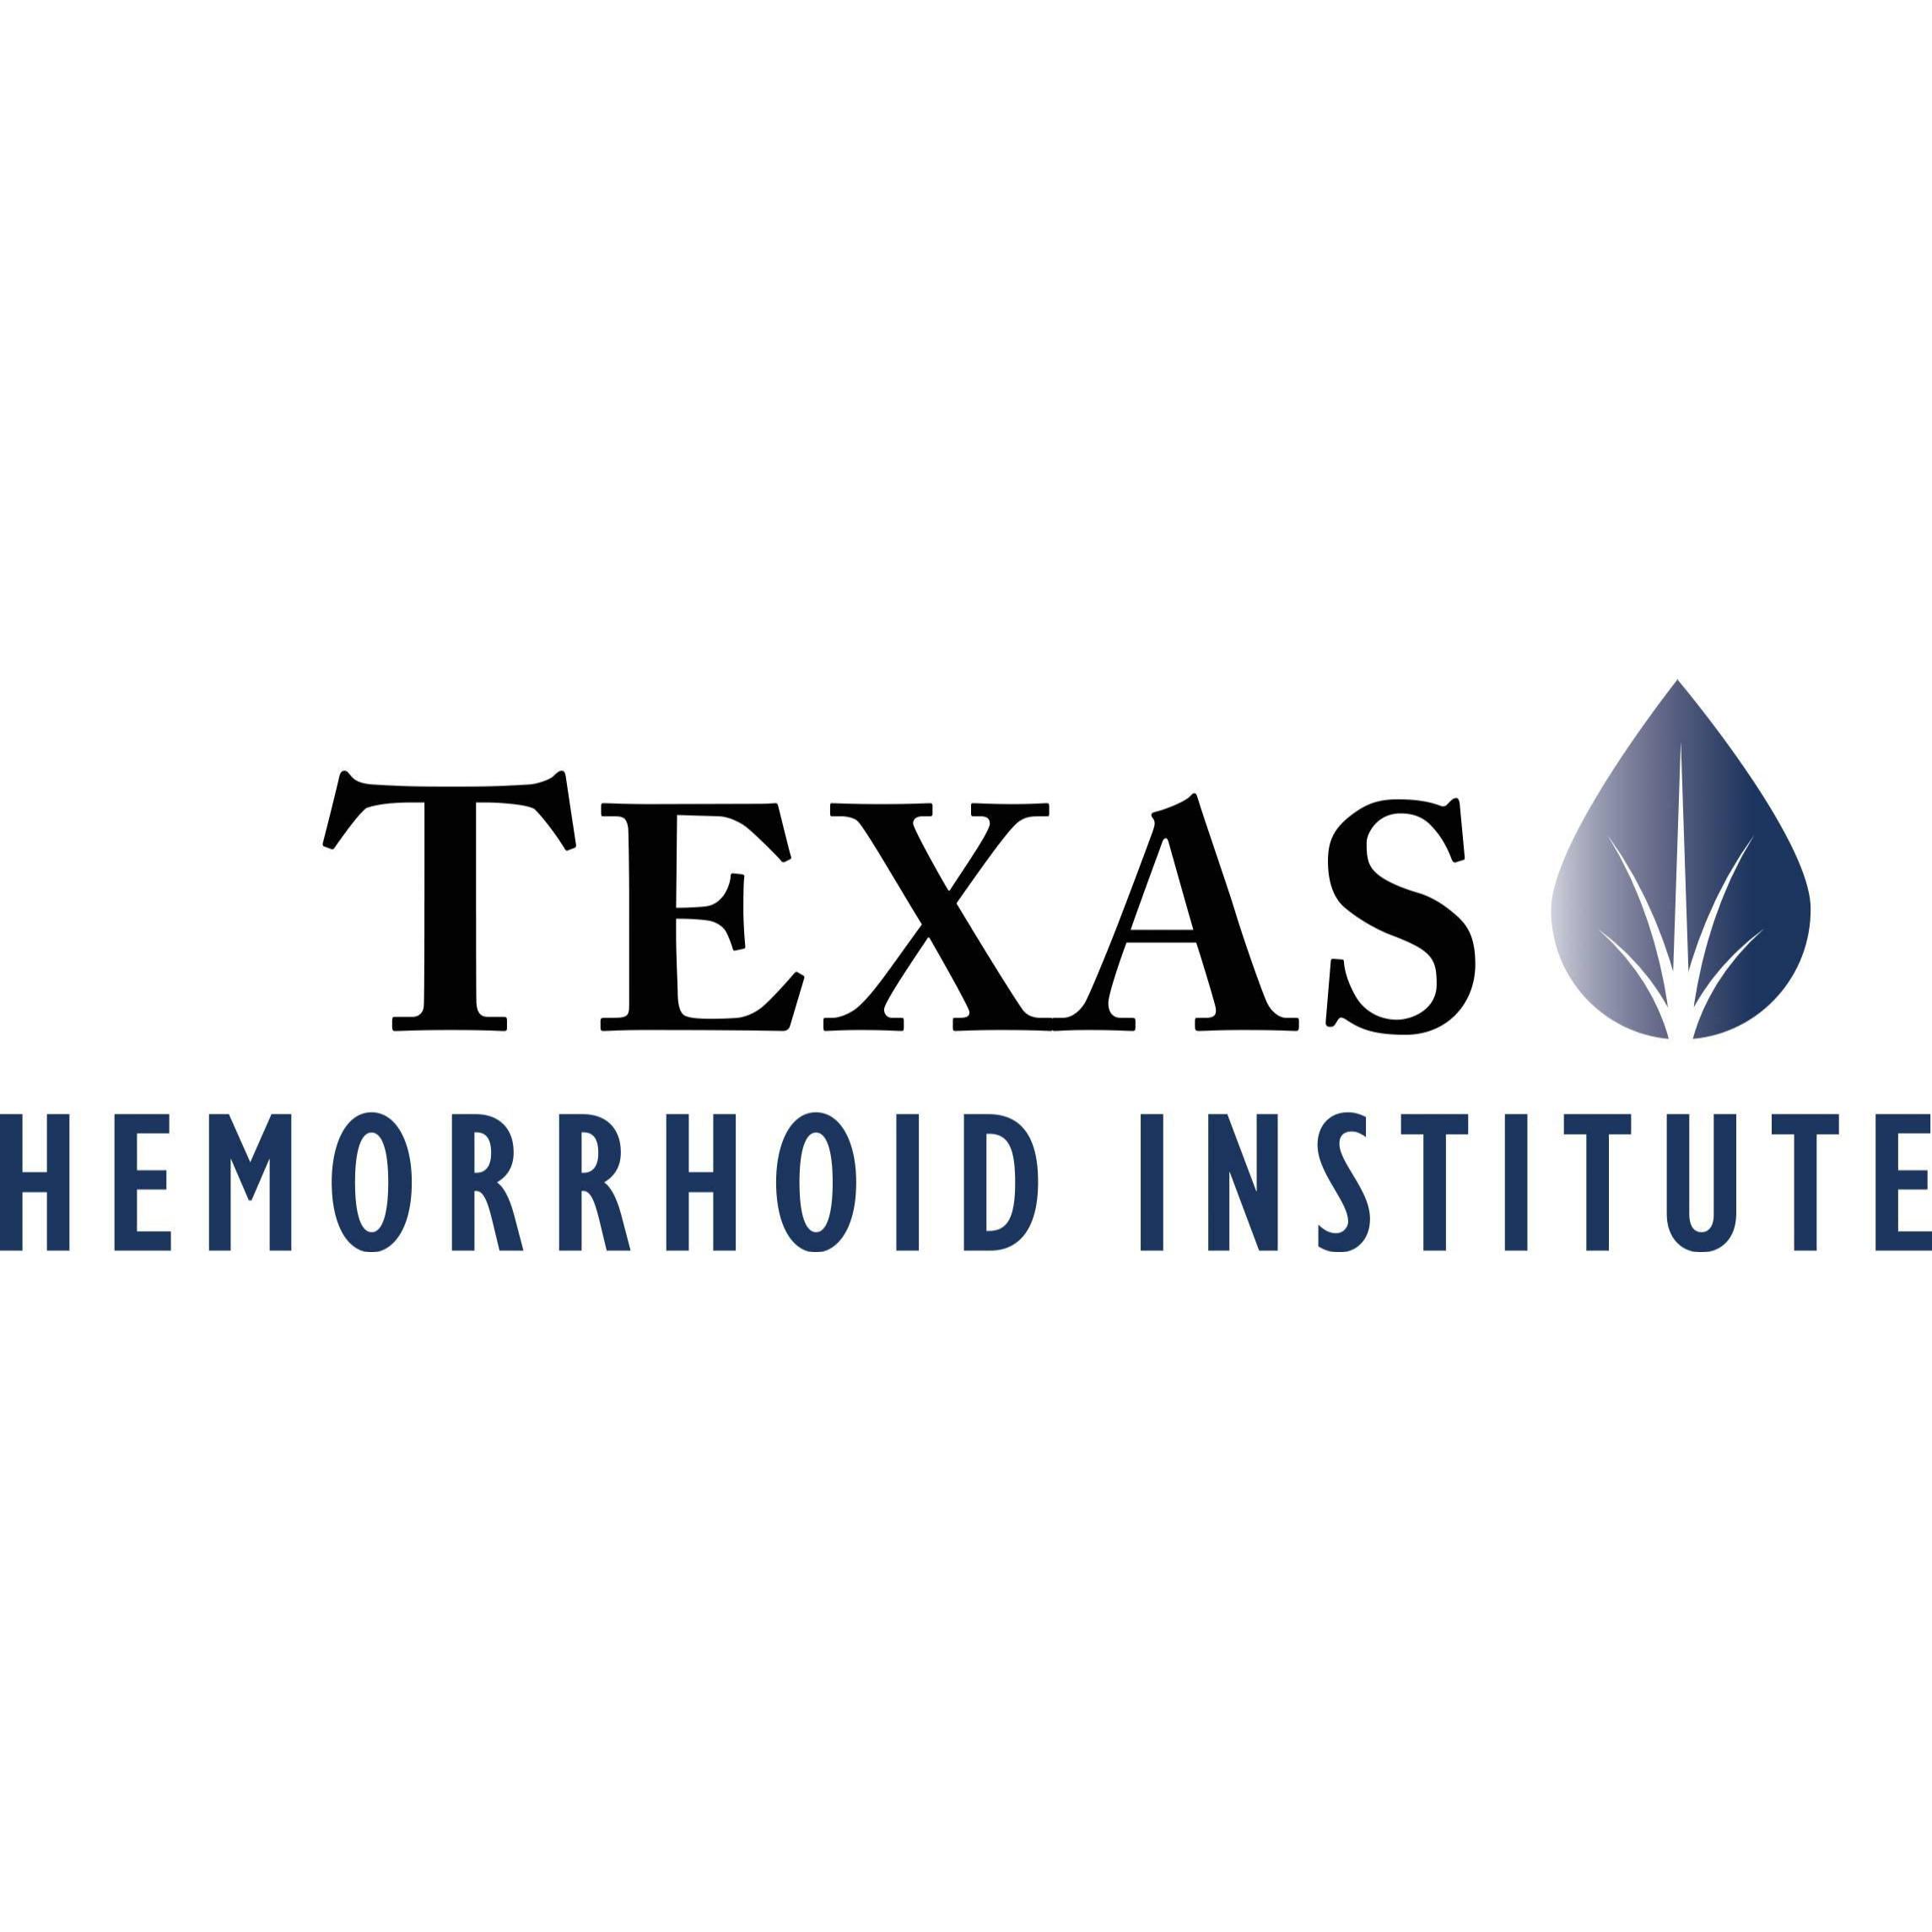 Texas Hemorrhoid Institute - Sugar Land - Sugar Land, TX 77479 - (713)575-3686 | ShowMeLocal.com